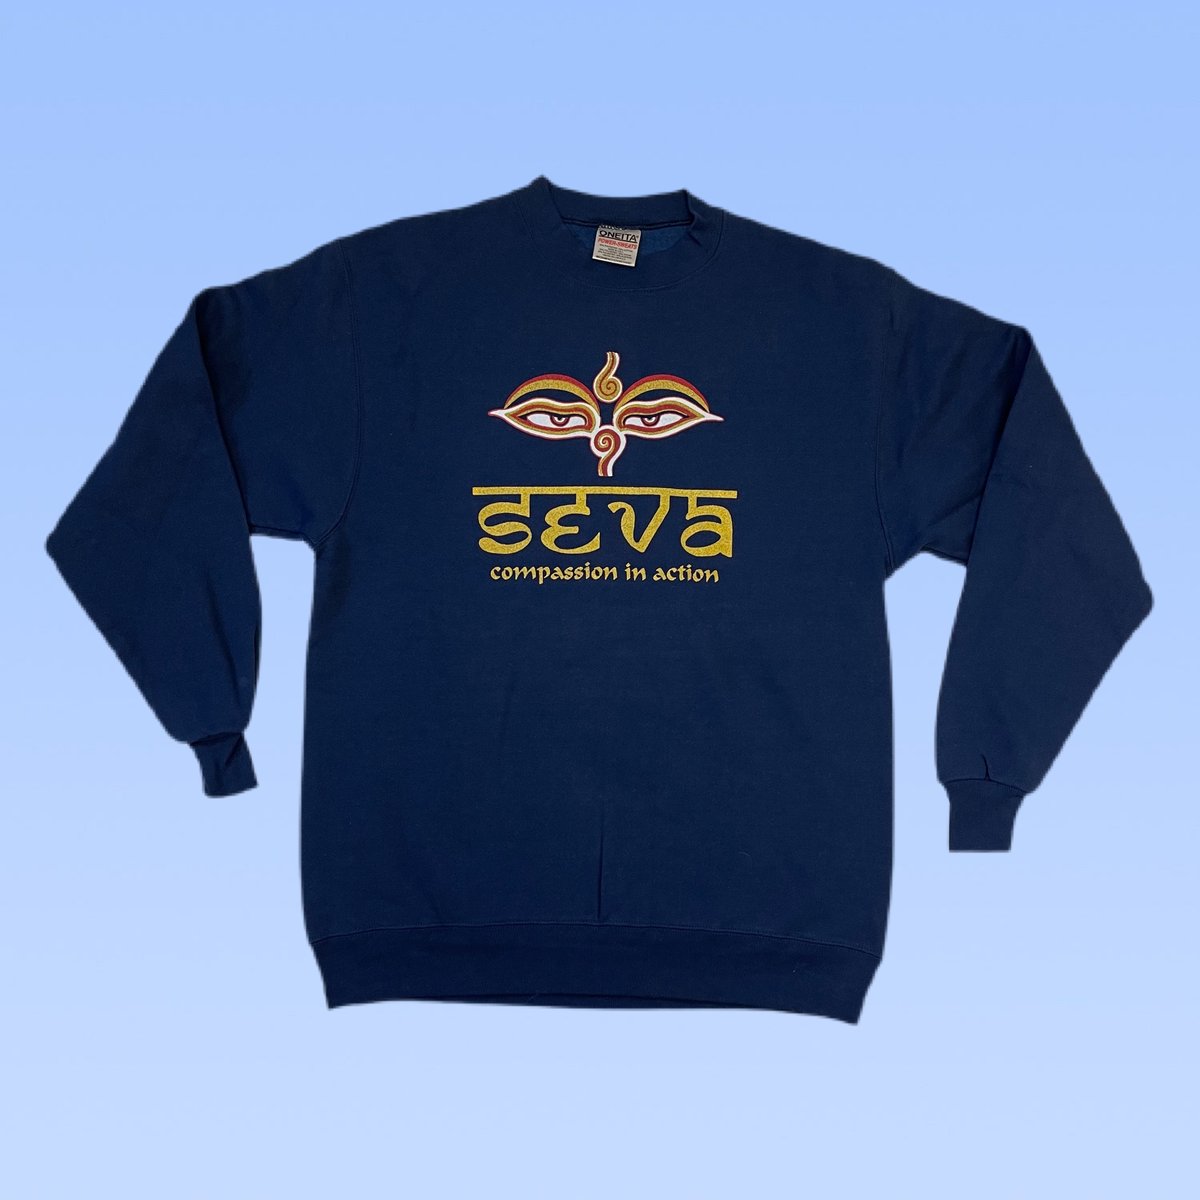 Original Vintage Grateful Dead 1990's Seva Long Sleeve Crewneck Sweatshirt! - SMALL or MEDIUM 